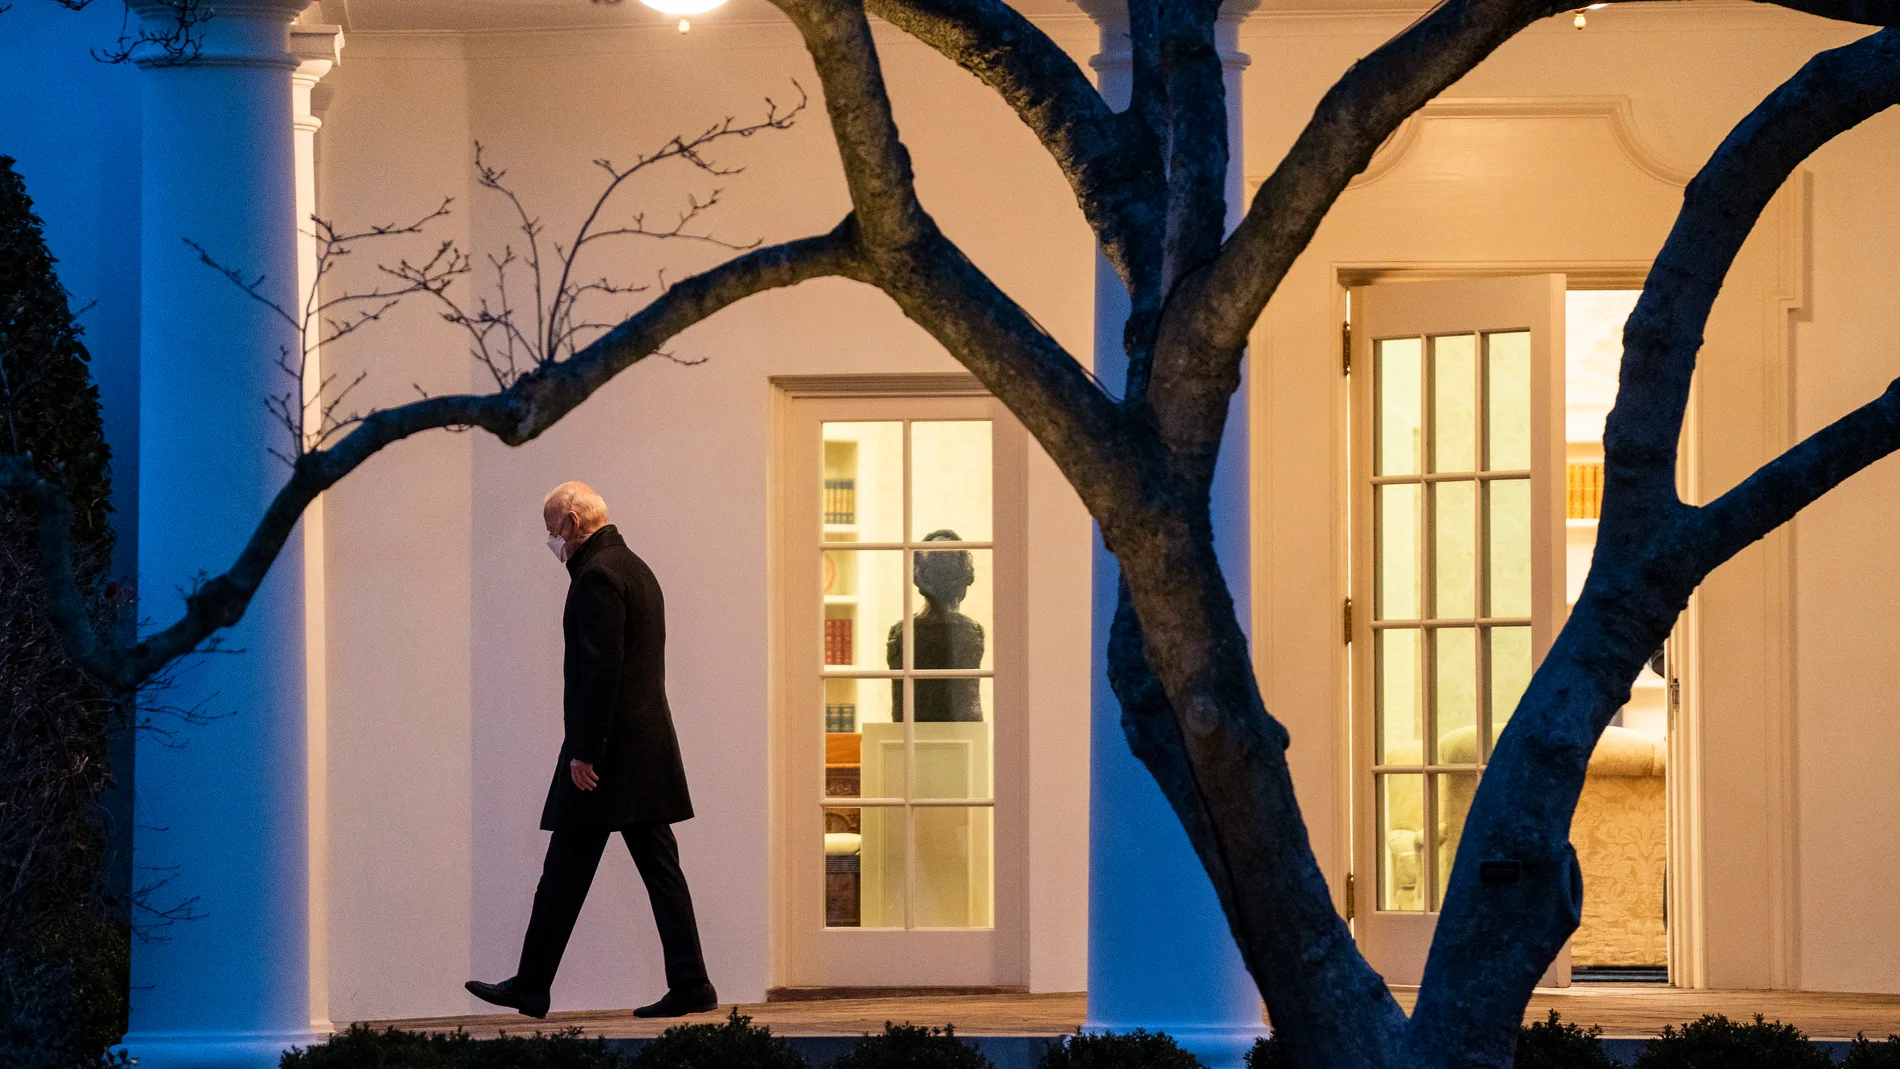 Joe Biden en la Casa Blanca